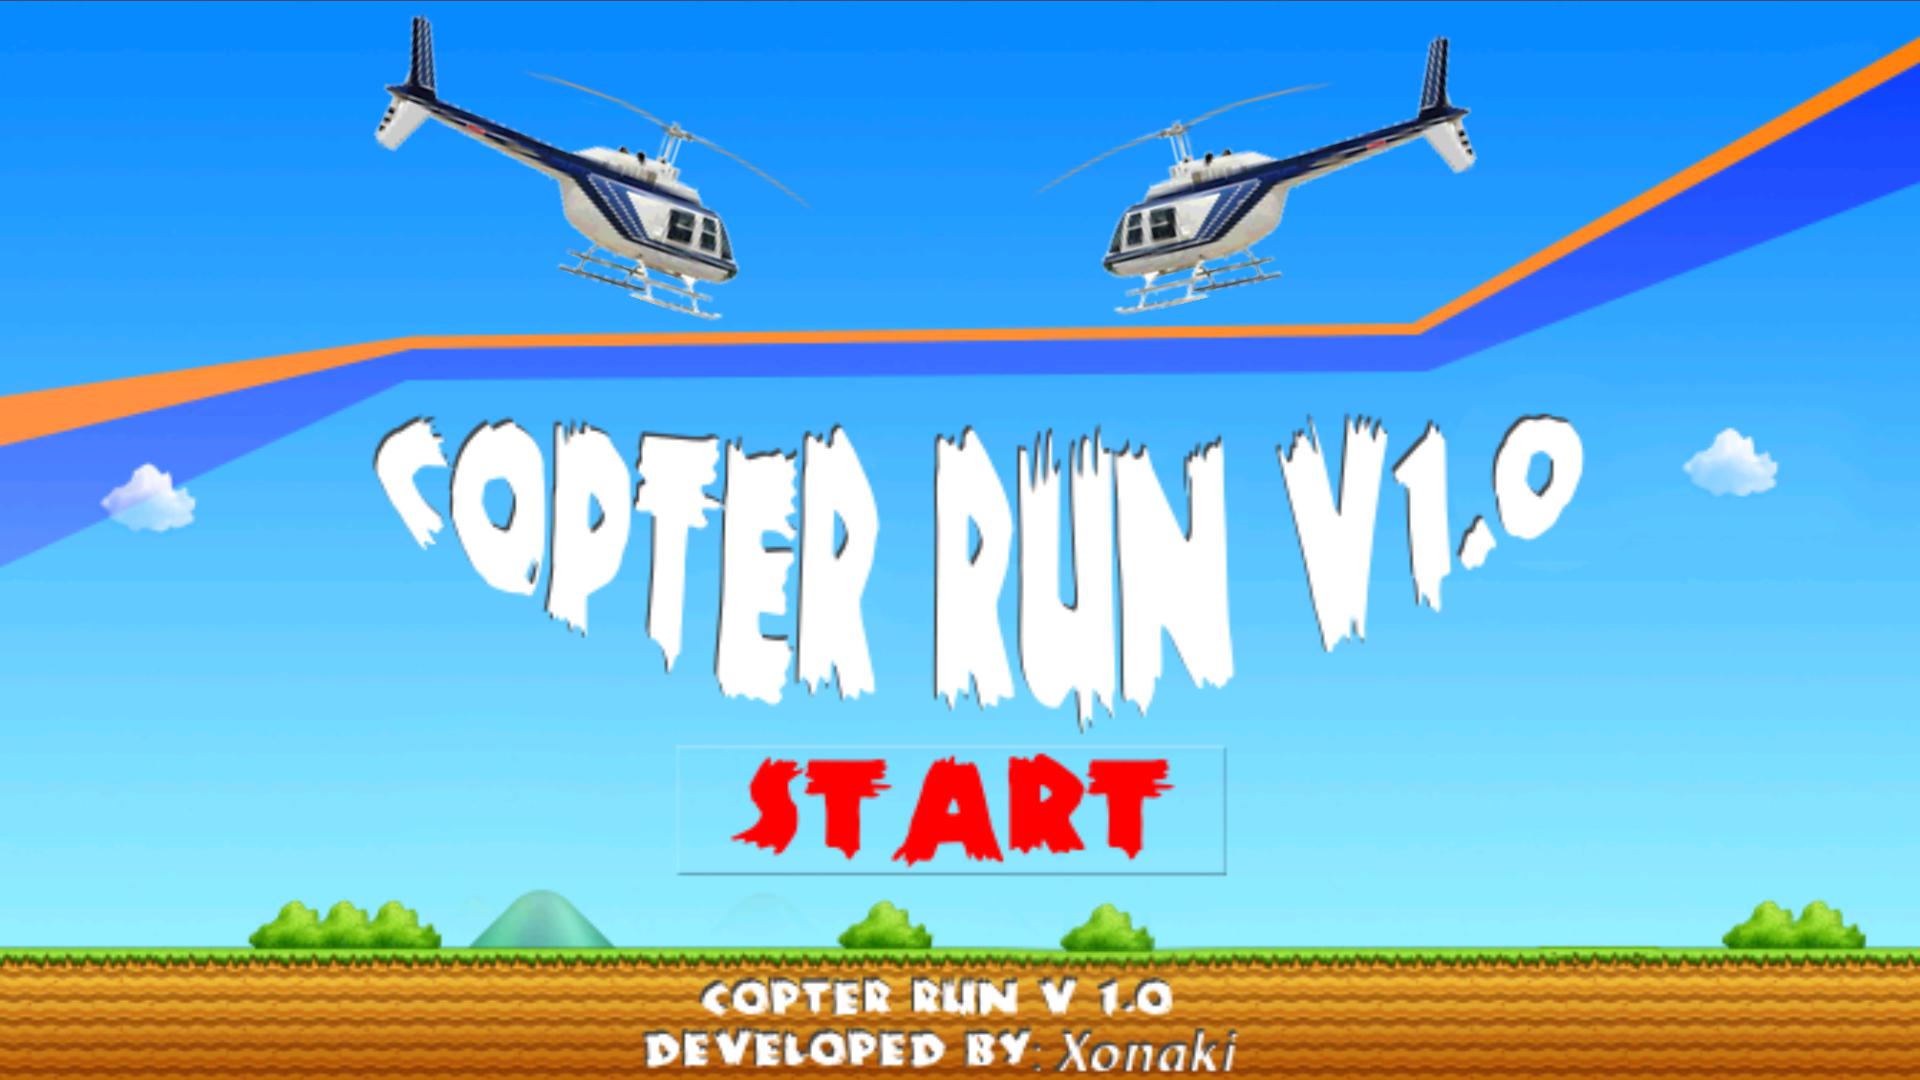 Copter Run v2